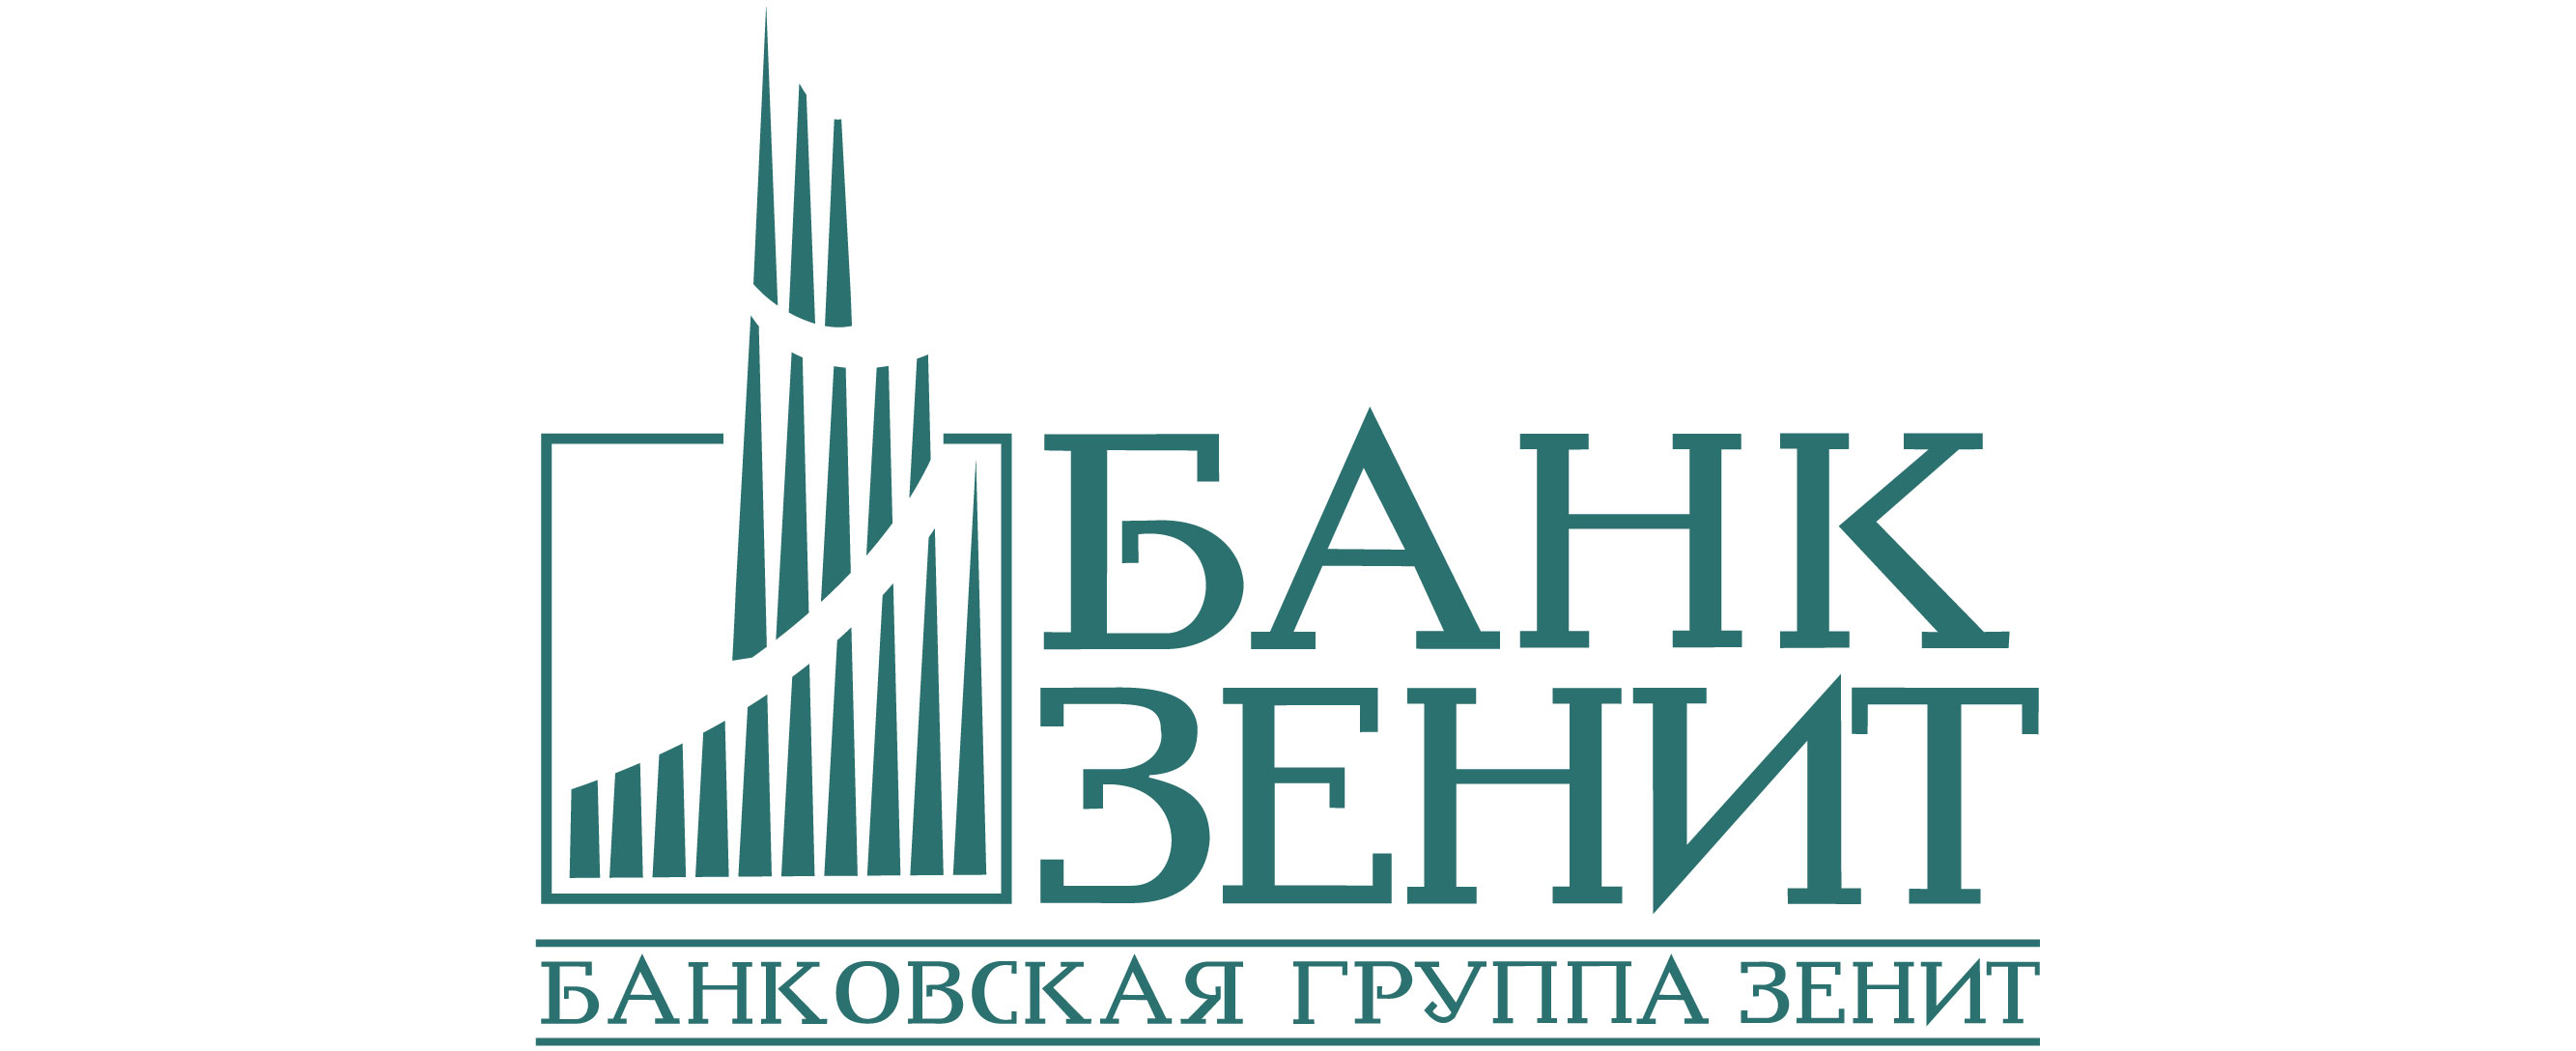 Банк ЗЕНИТ запустил сервис онлайн-инкассации для ритейла